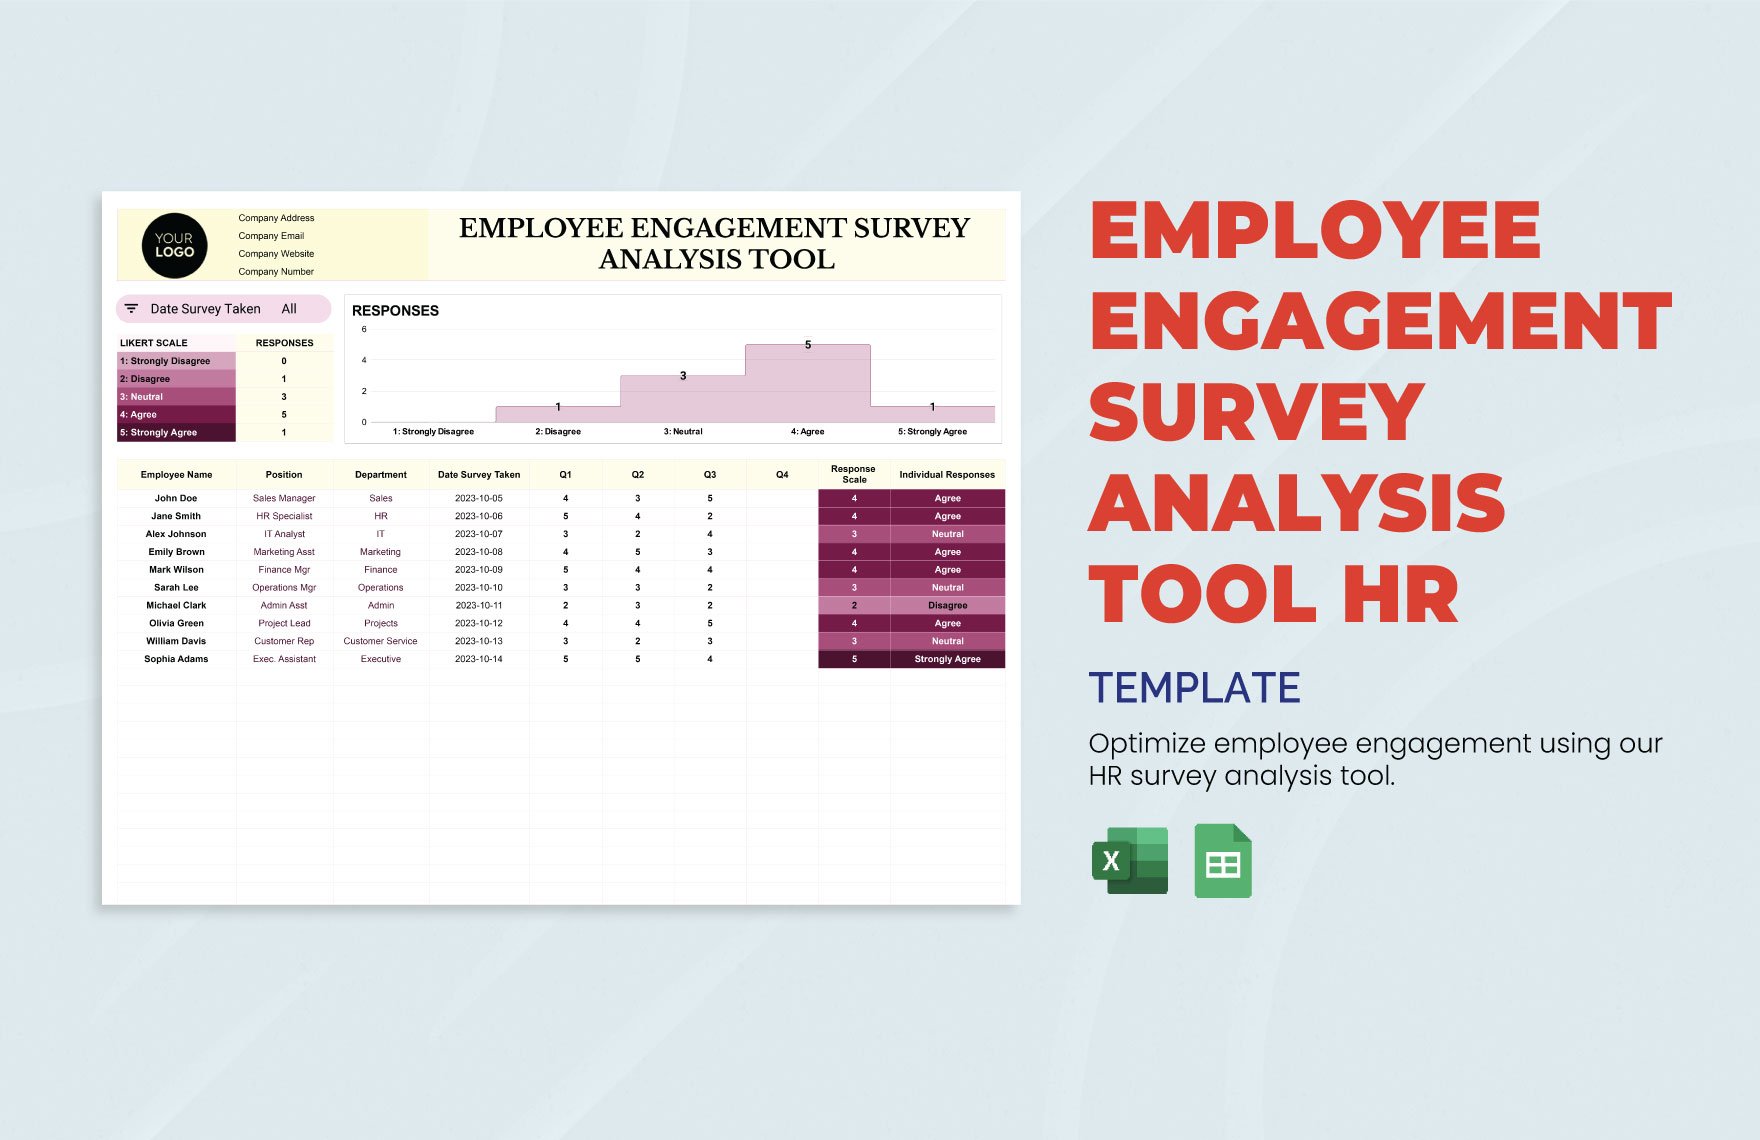 Employee Engagement Survey Analysis Tool HR Template